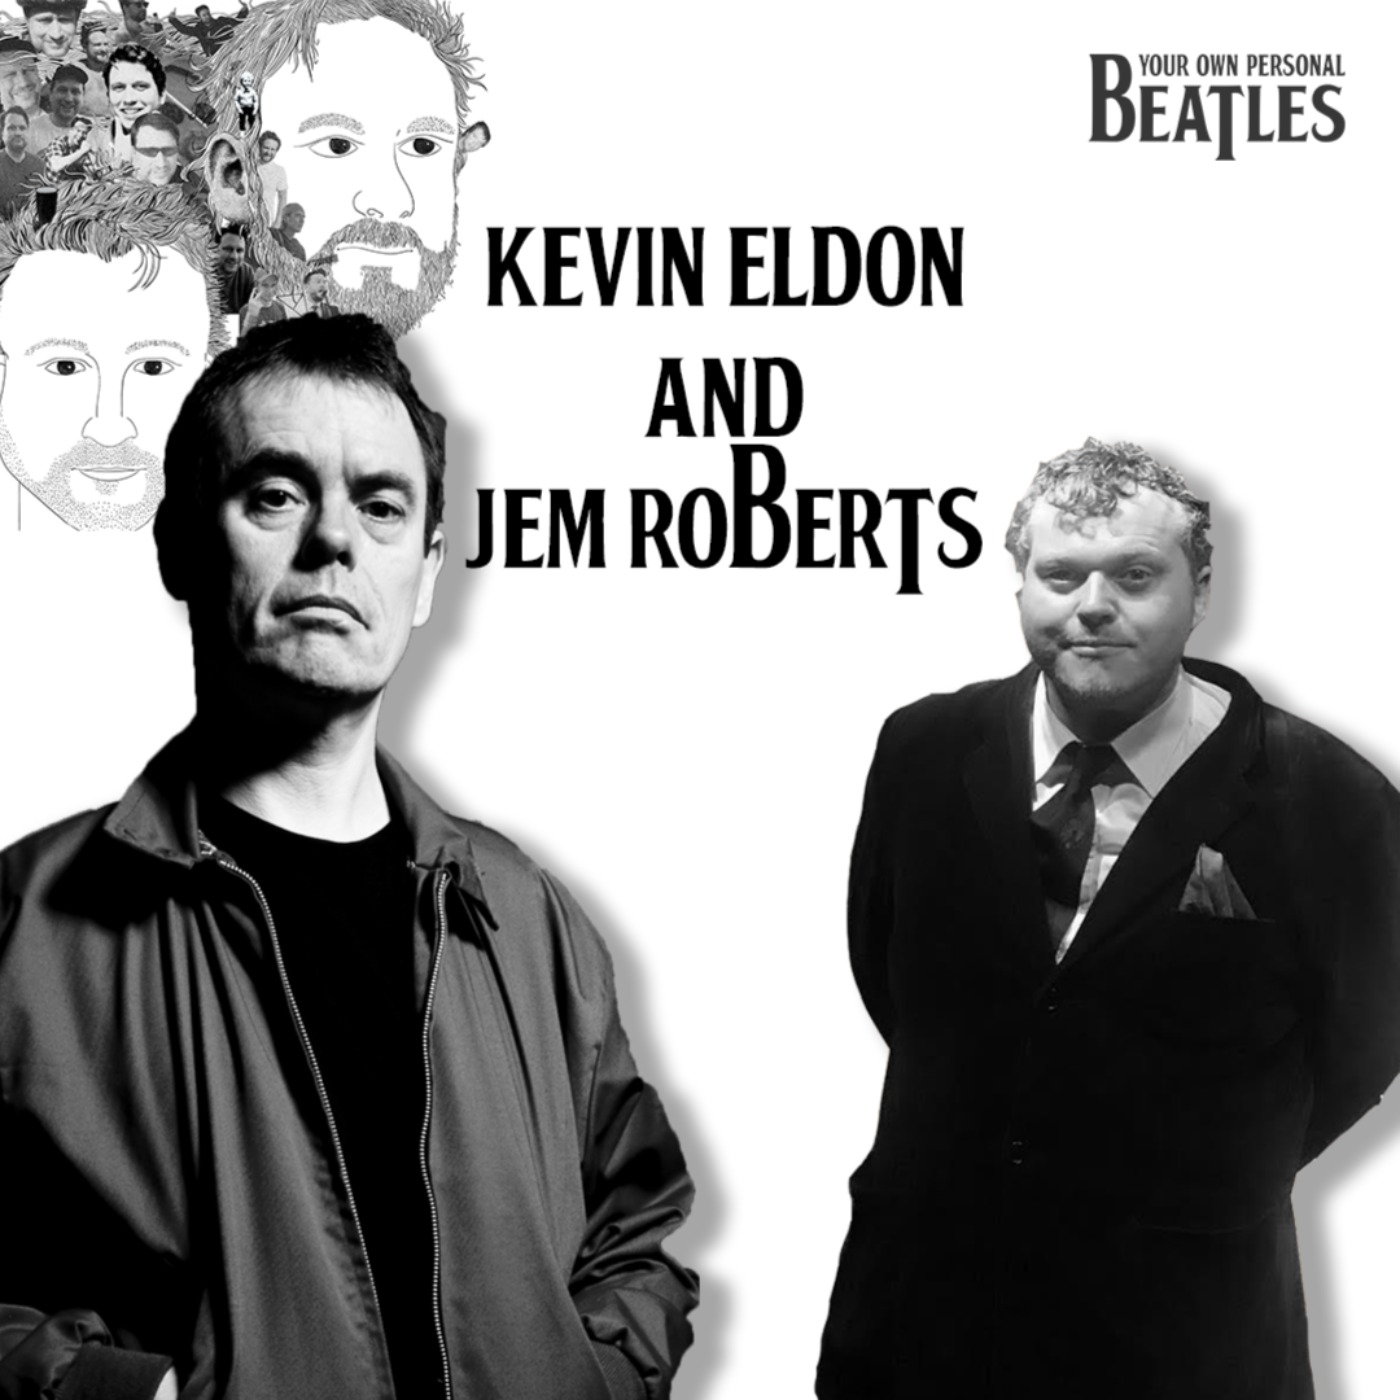 Kevin Eldon & Jem Roberts’ Personal Beatles